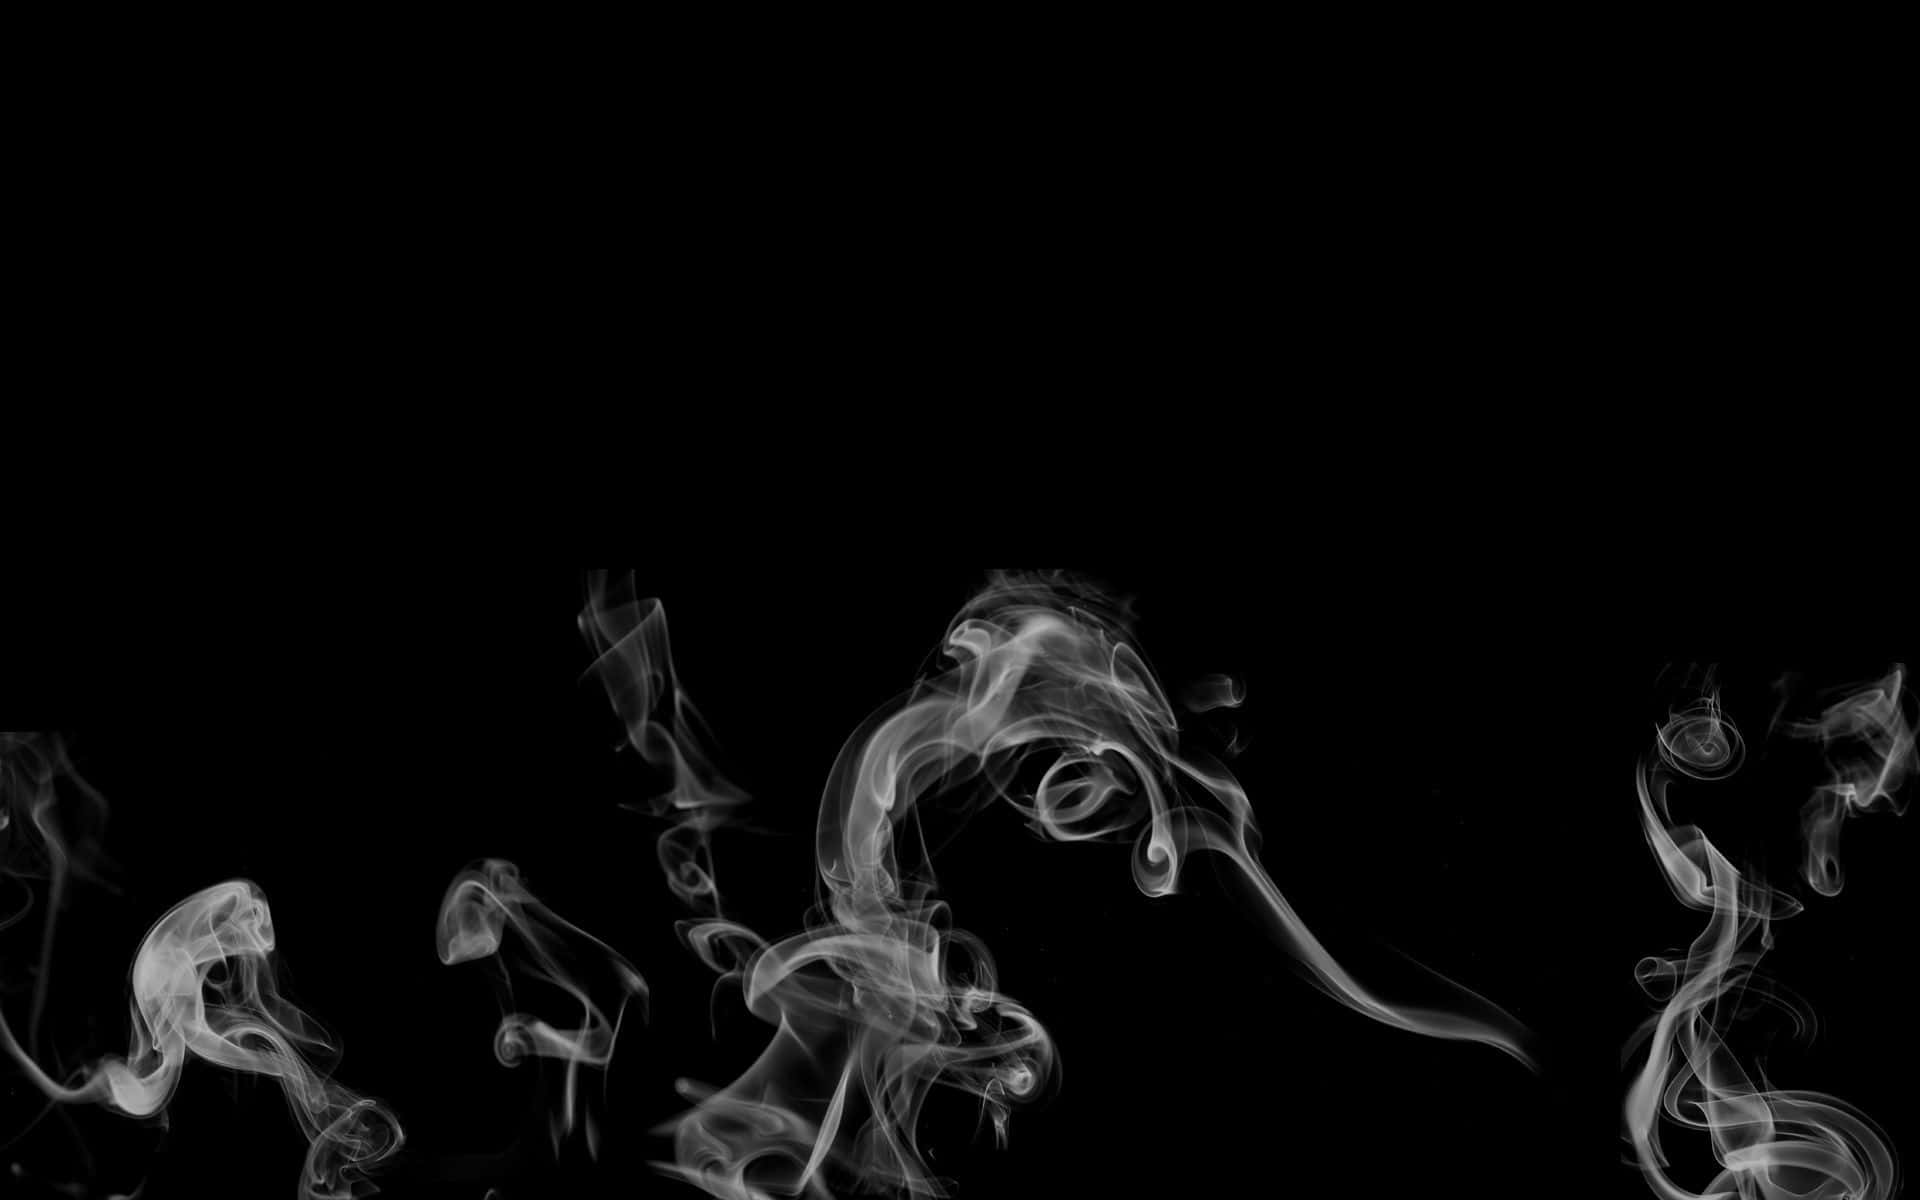 Captivating Wisp: A mystic smoke dance against a dark backdrop